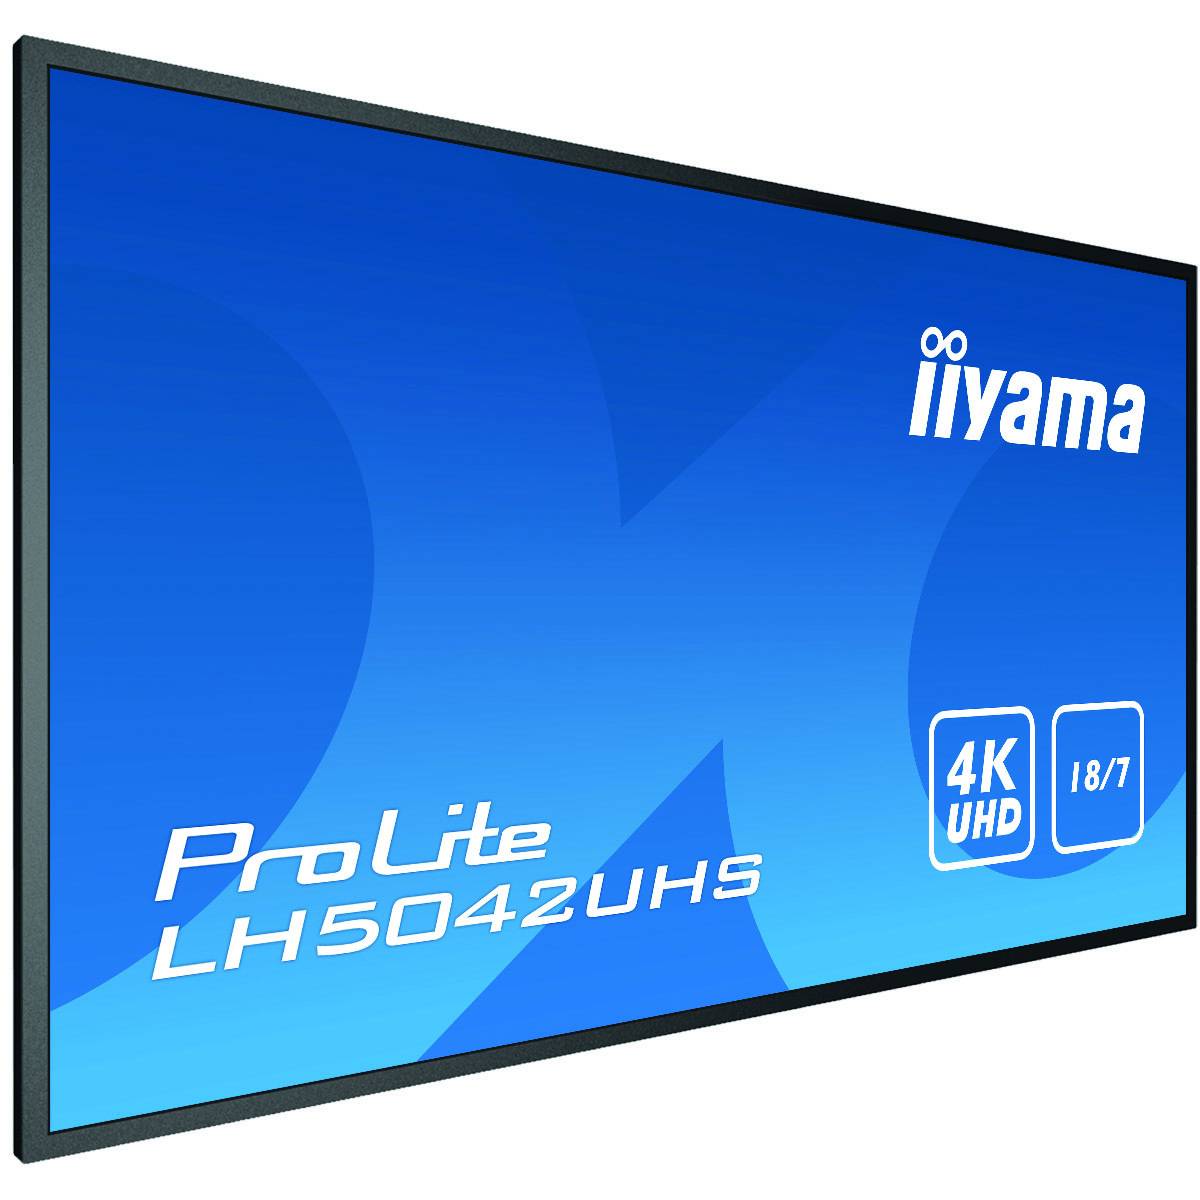 Rca Informatique - image du produit : 49.5IN LED 16:9 LH5052UHS-B1 3840X2160 4000:1 8MS VGA/HDMI/US